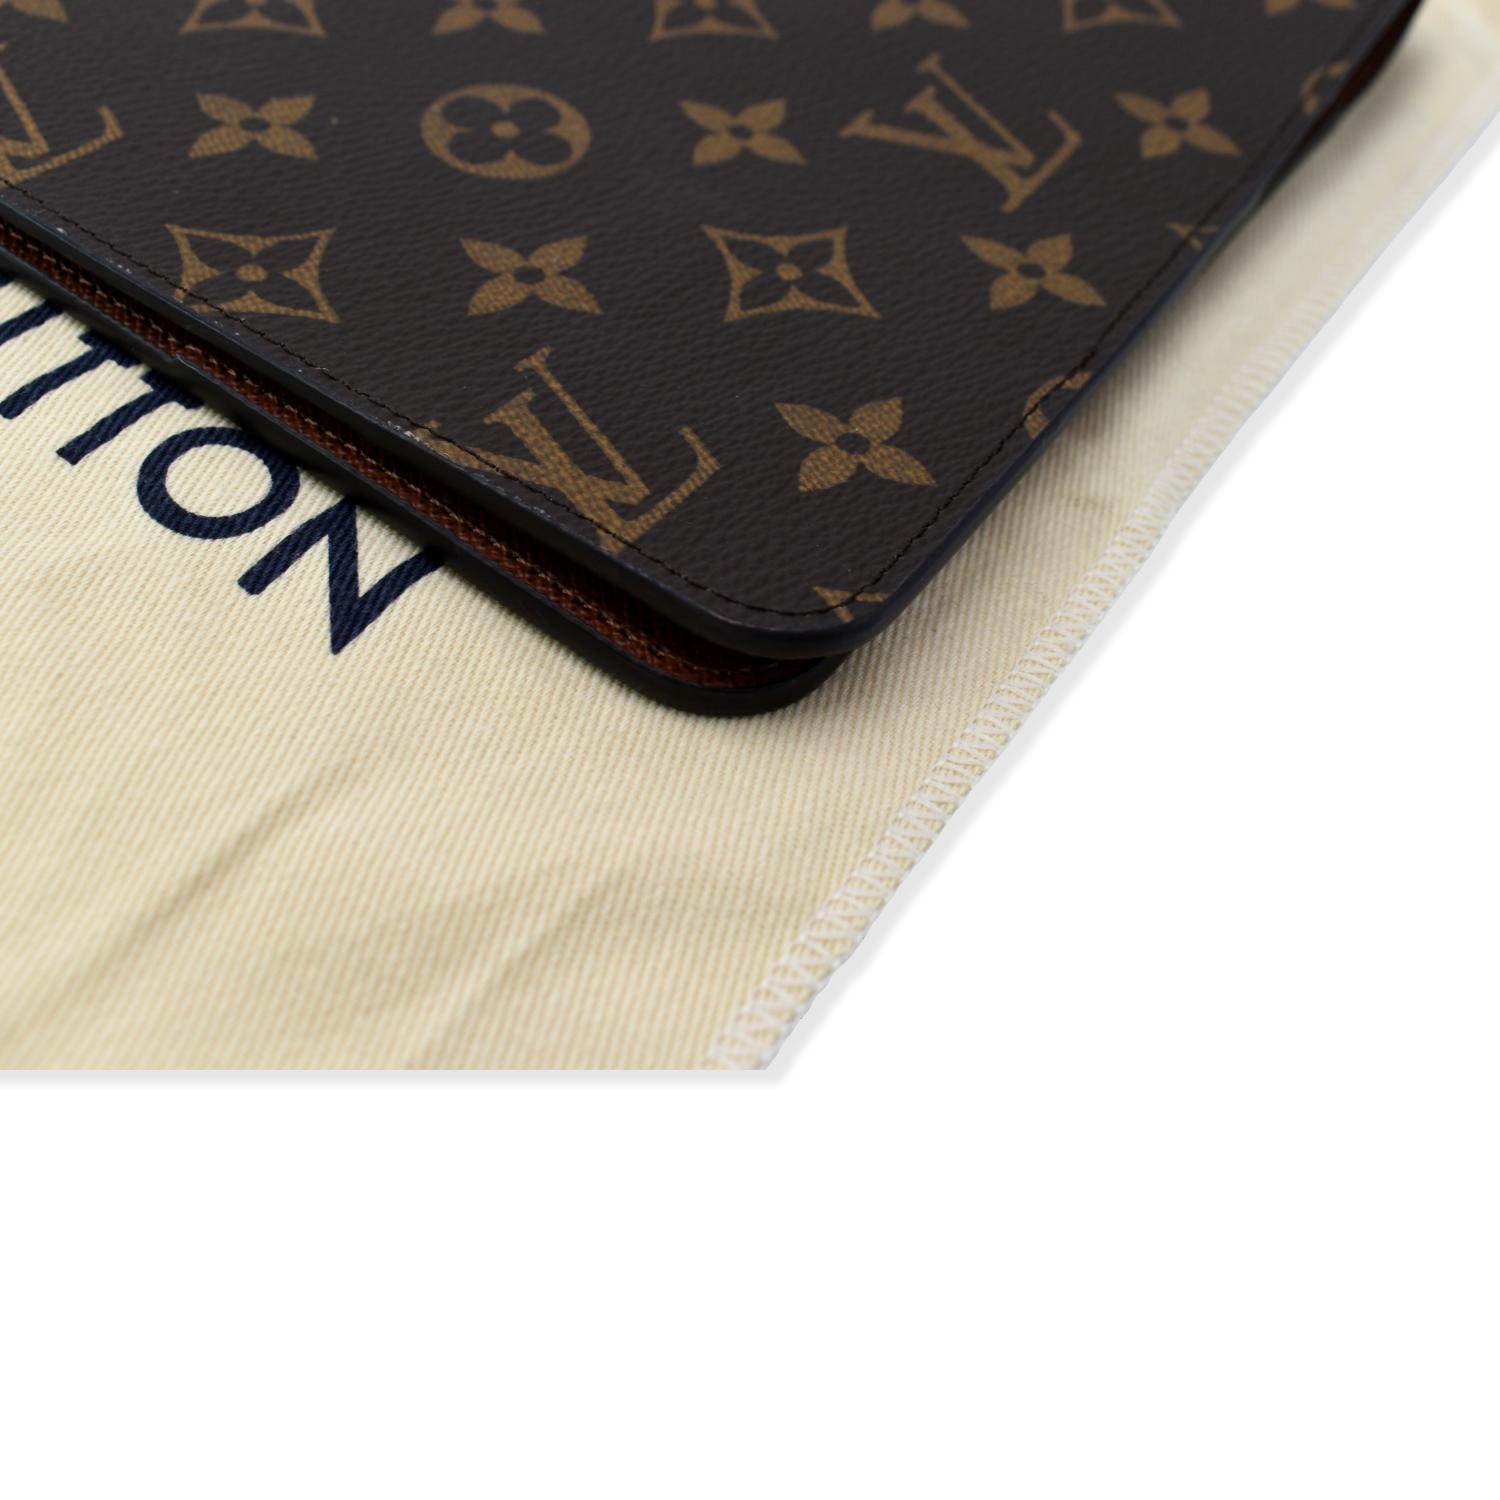 Backgrounds - Louis Vuitton Monogram Canvas - iPad iPhone HD